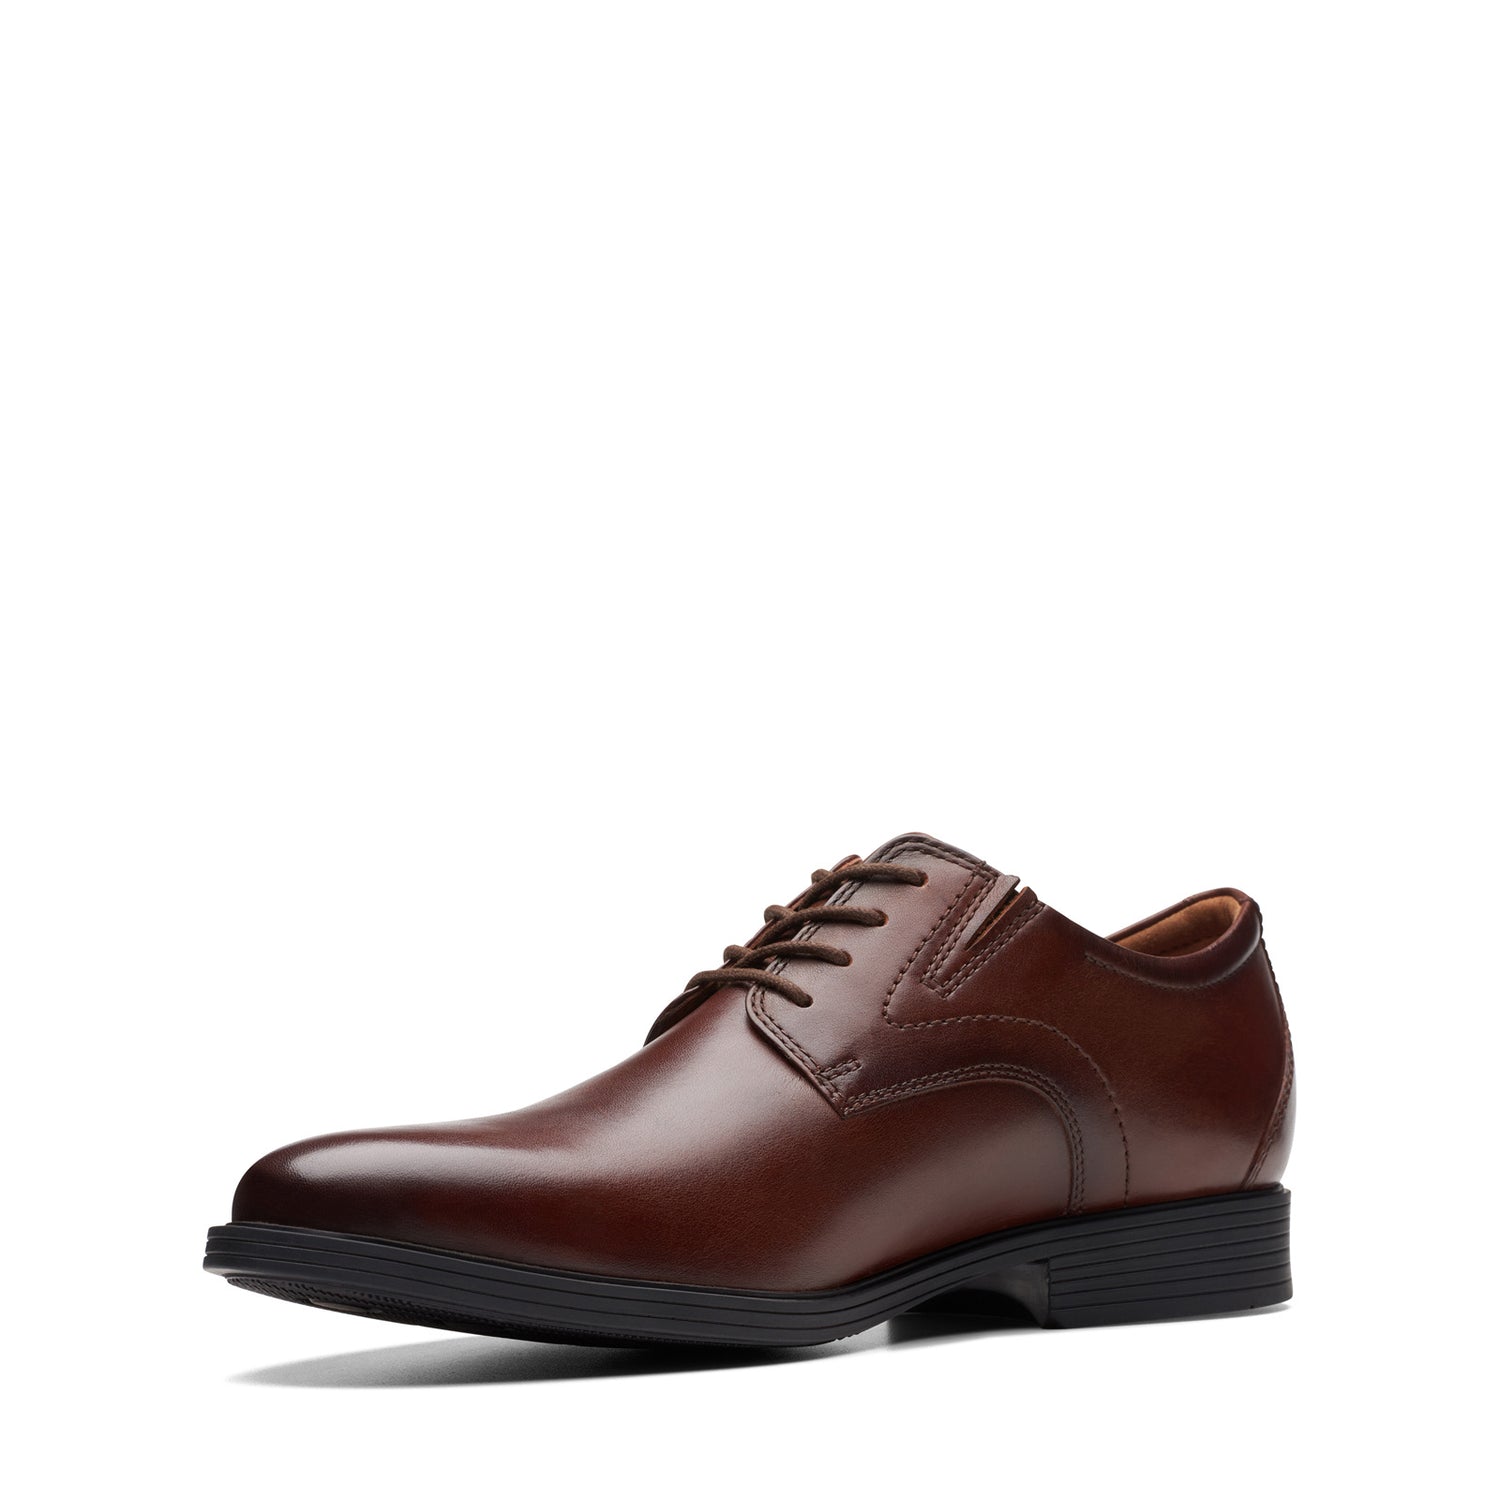 Peltz Shoes  Men's Clarks Whiddon Plain Oxford Mahogany 26174473